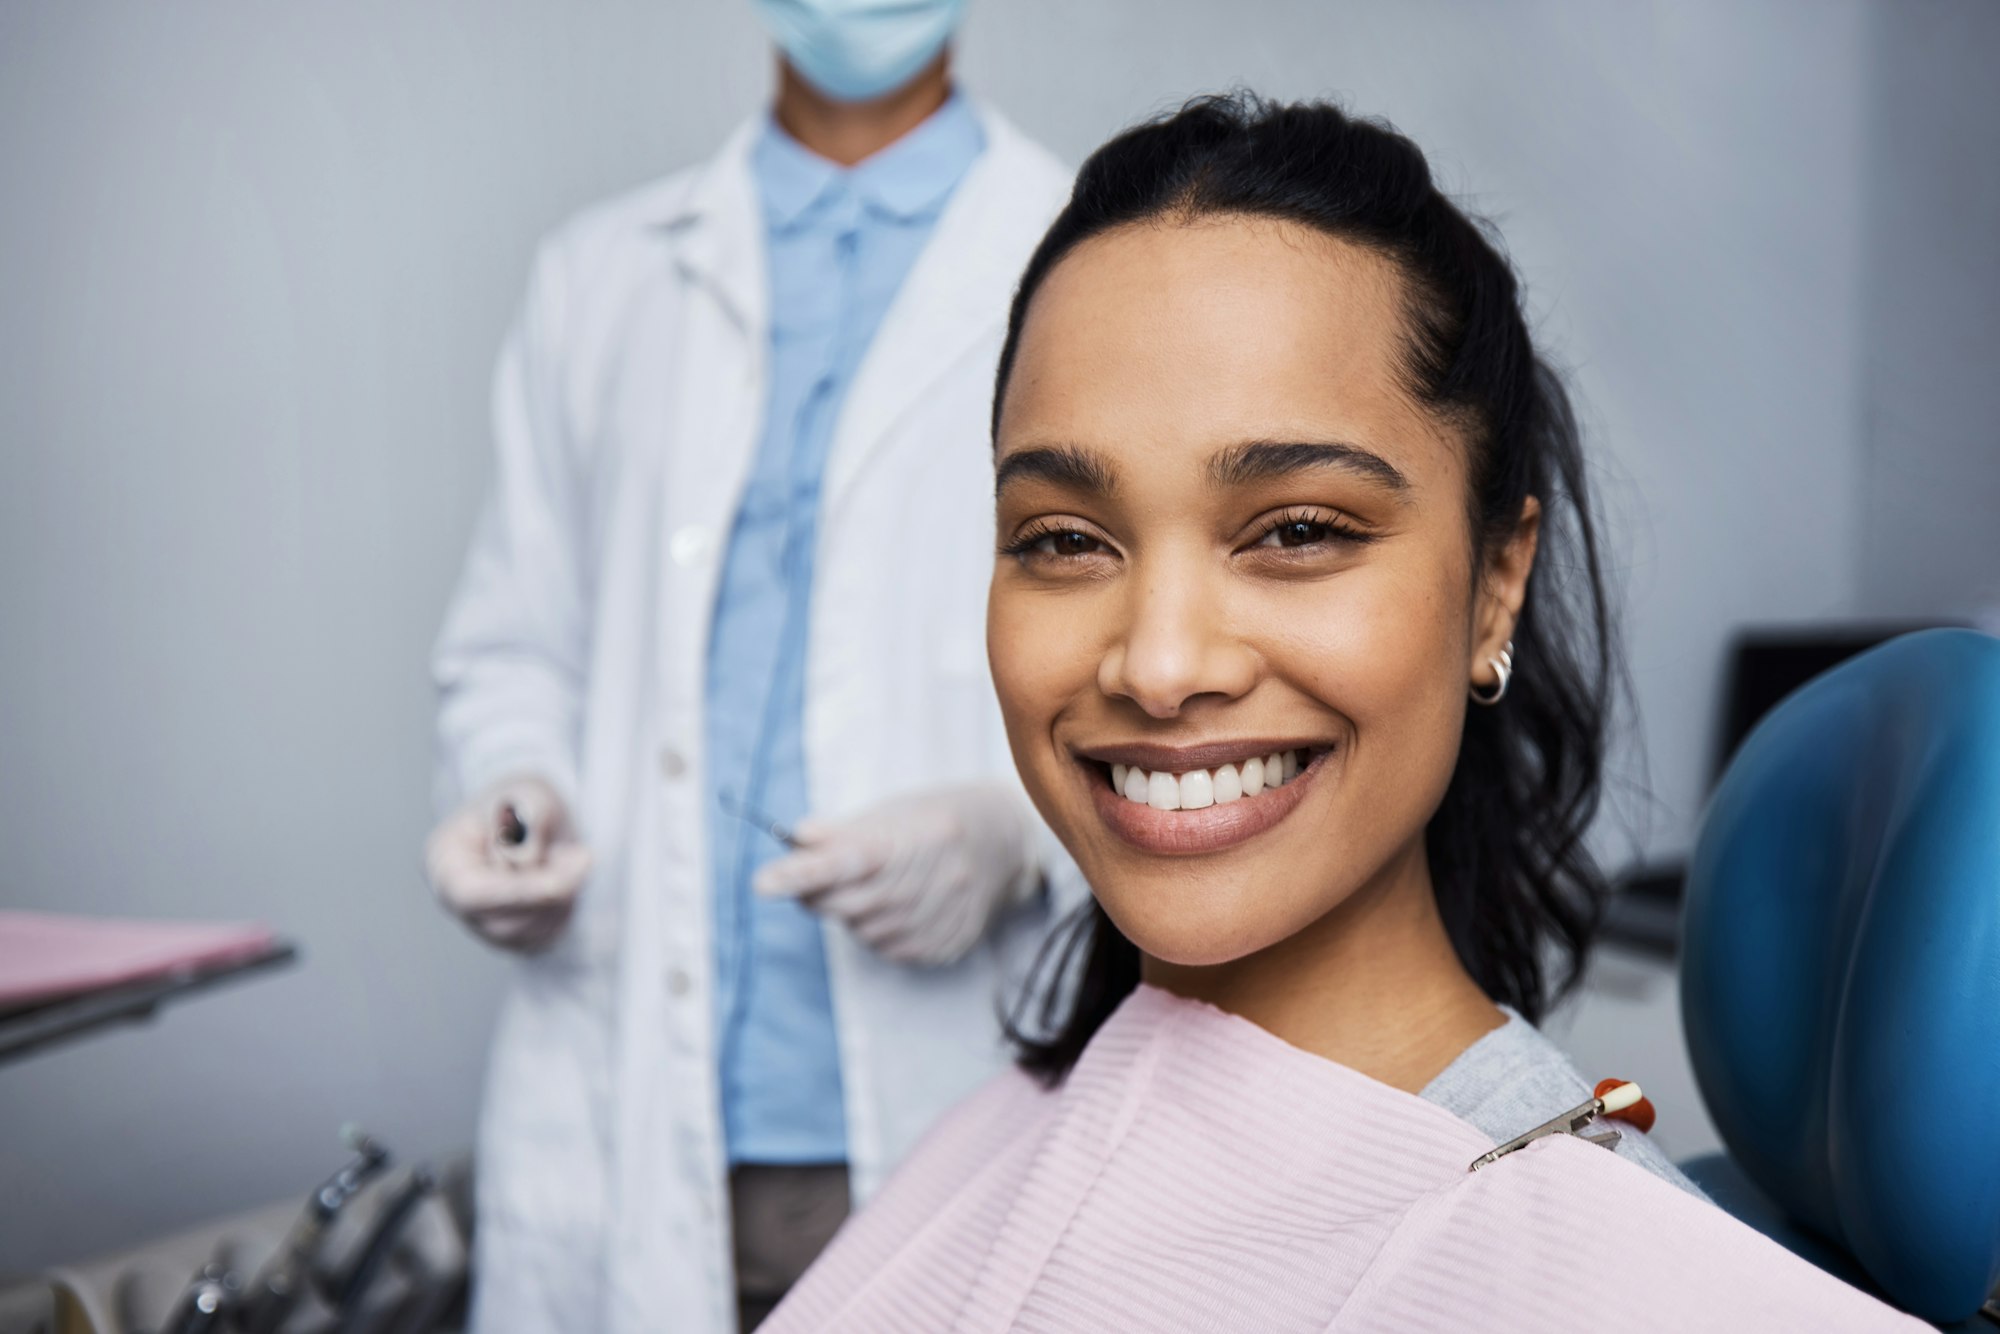 Smiling woman undergoing dental work, demonstrating the process and patient satisfaction with Wilkodontics at Schlueter Periodontics.